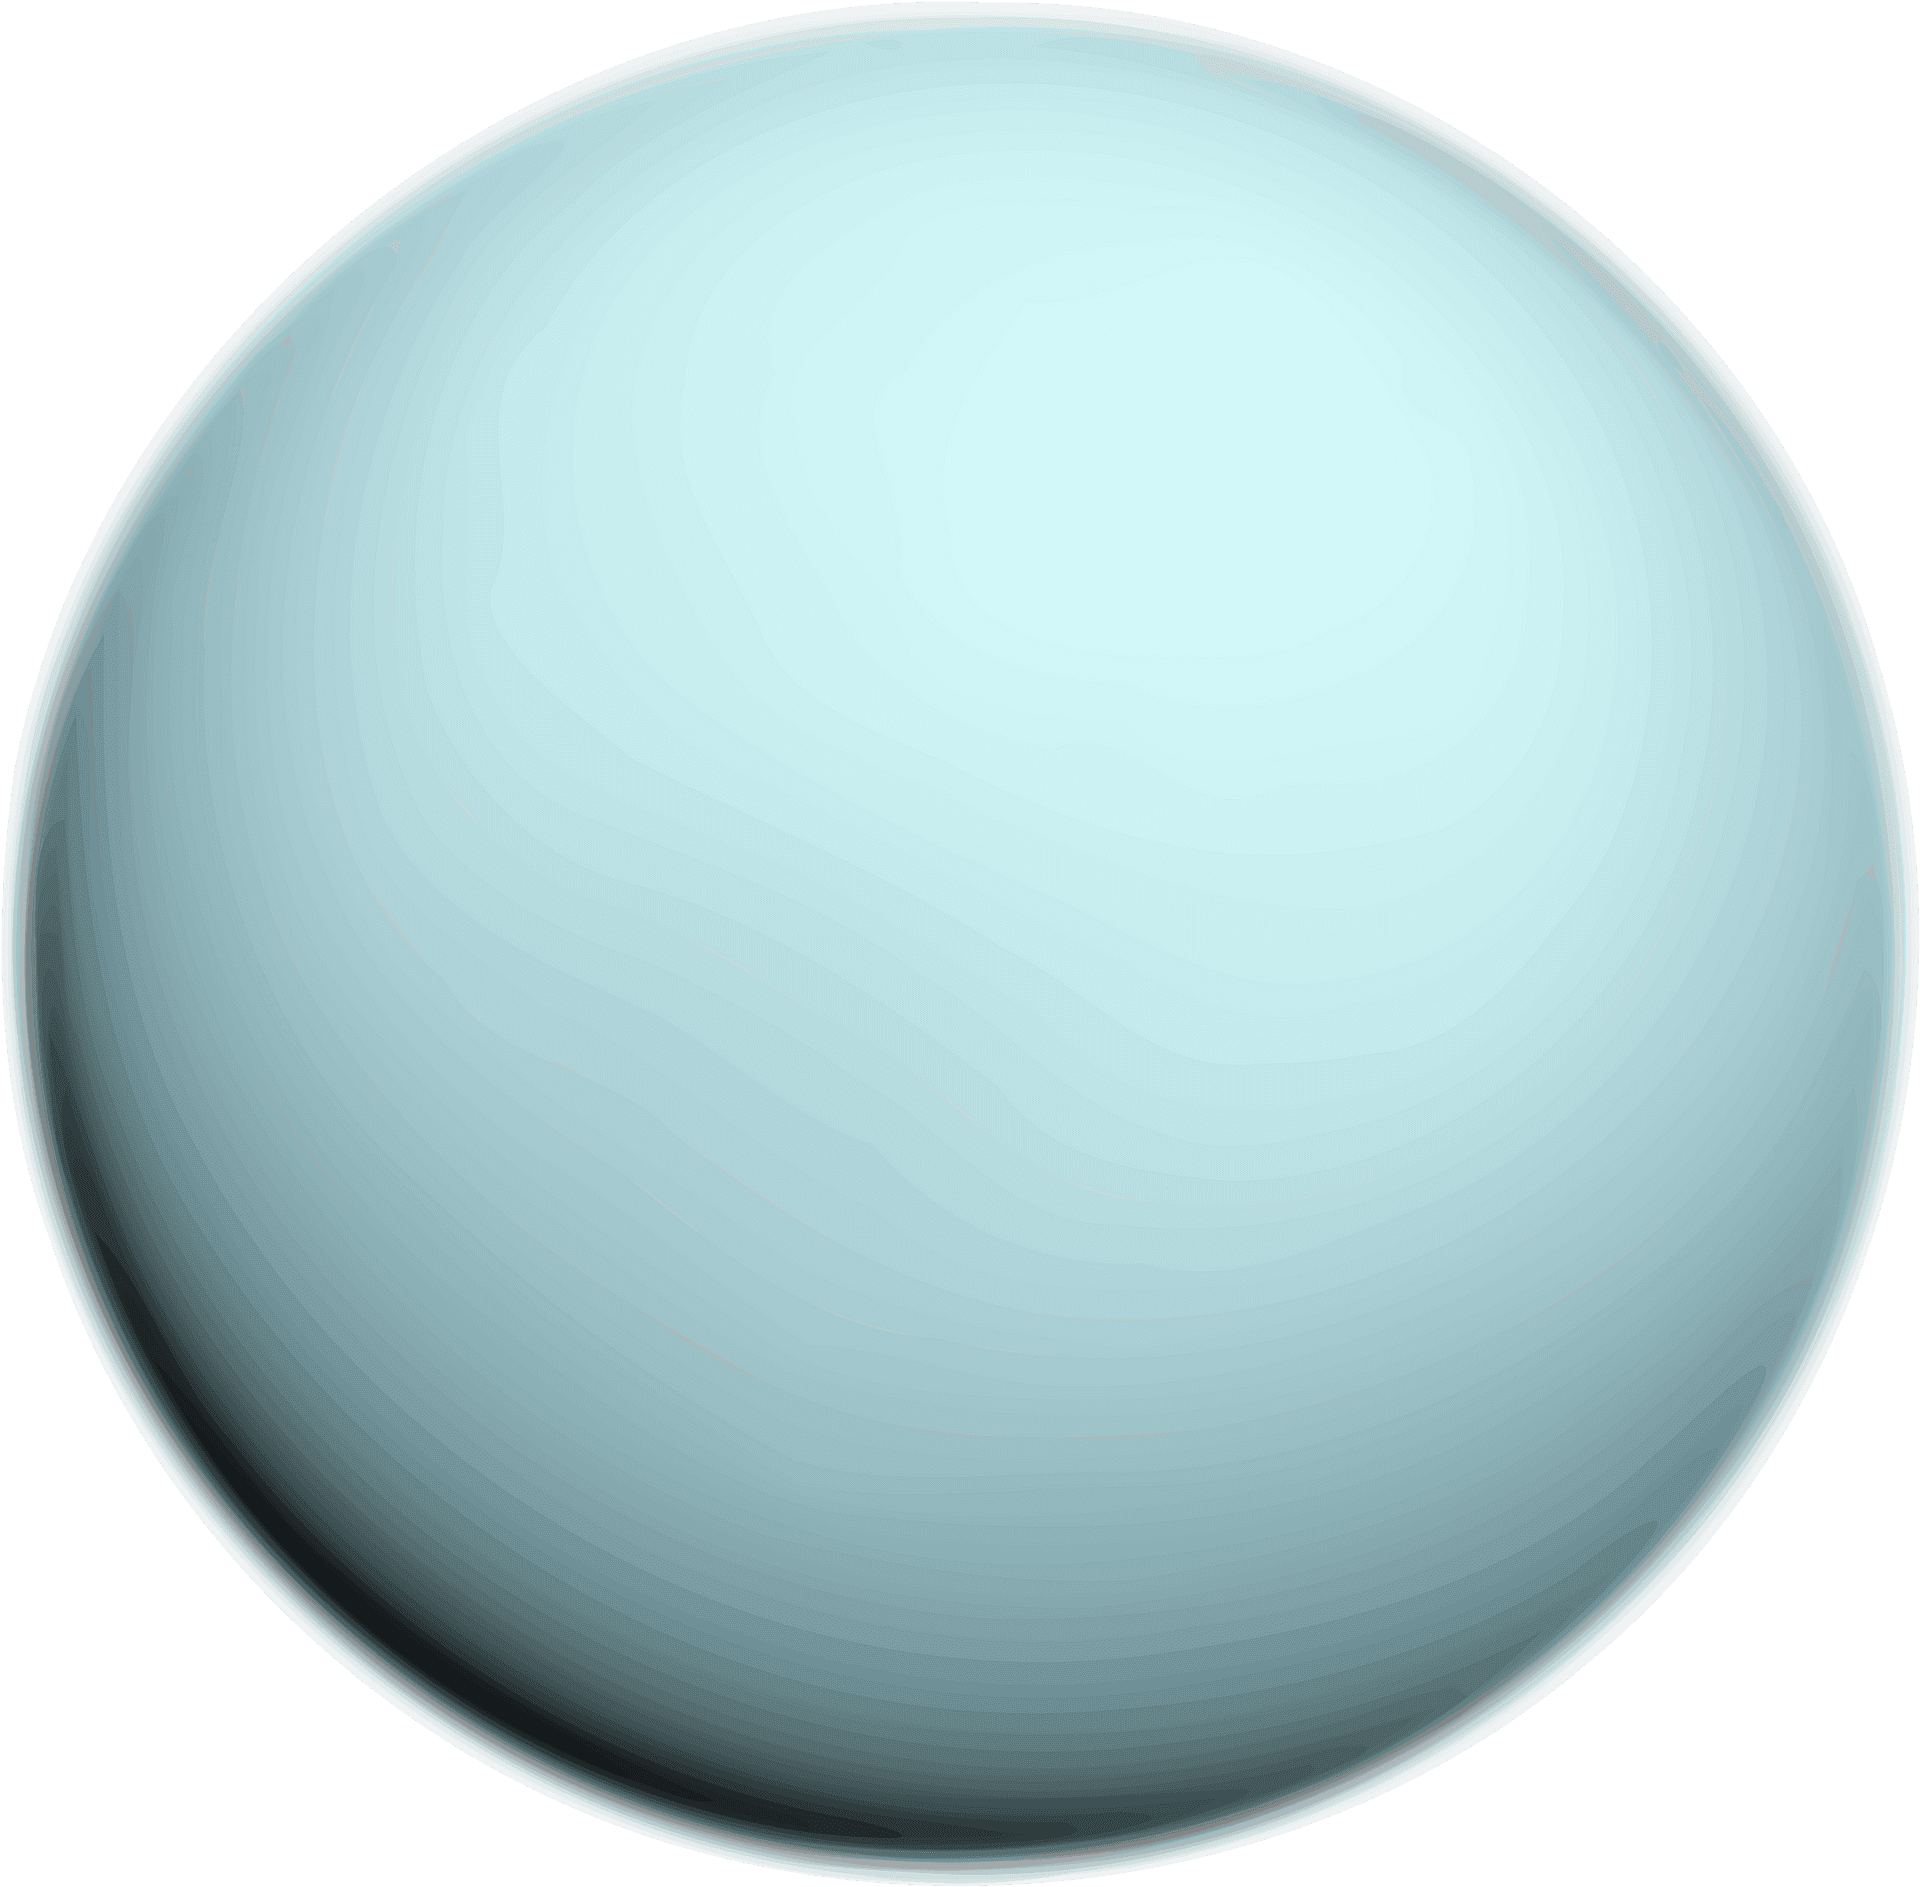 Uranus Planet Graphic Representation PNG image